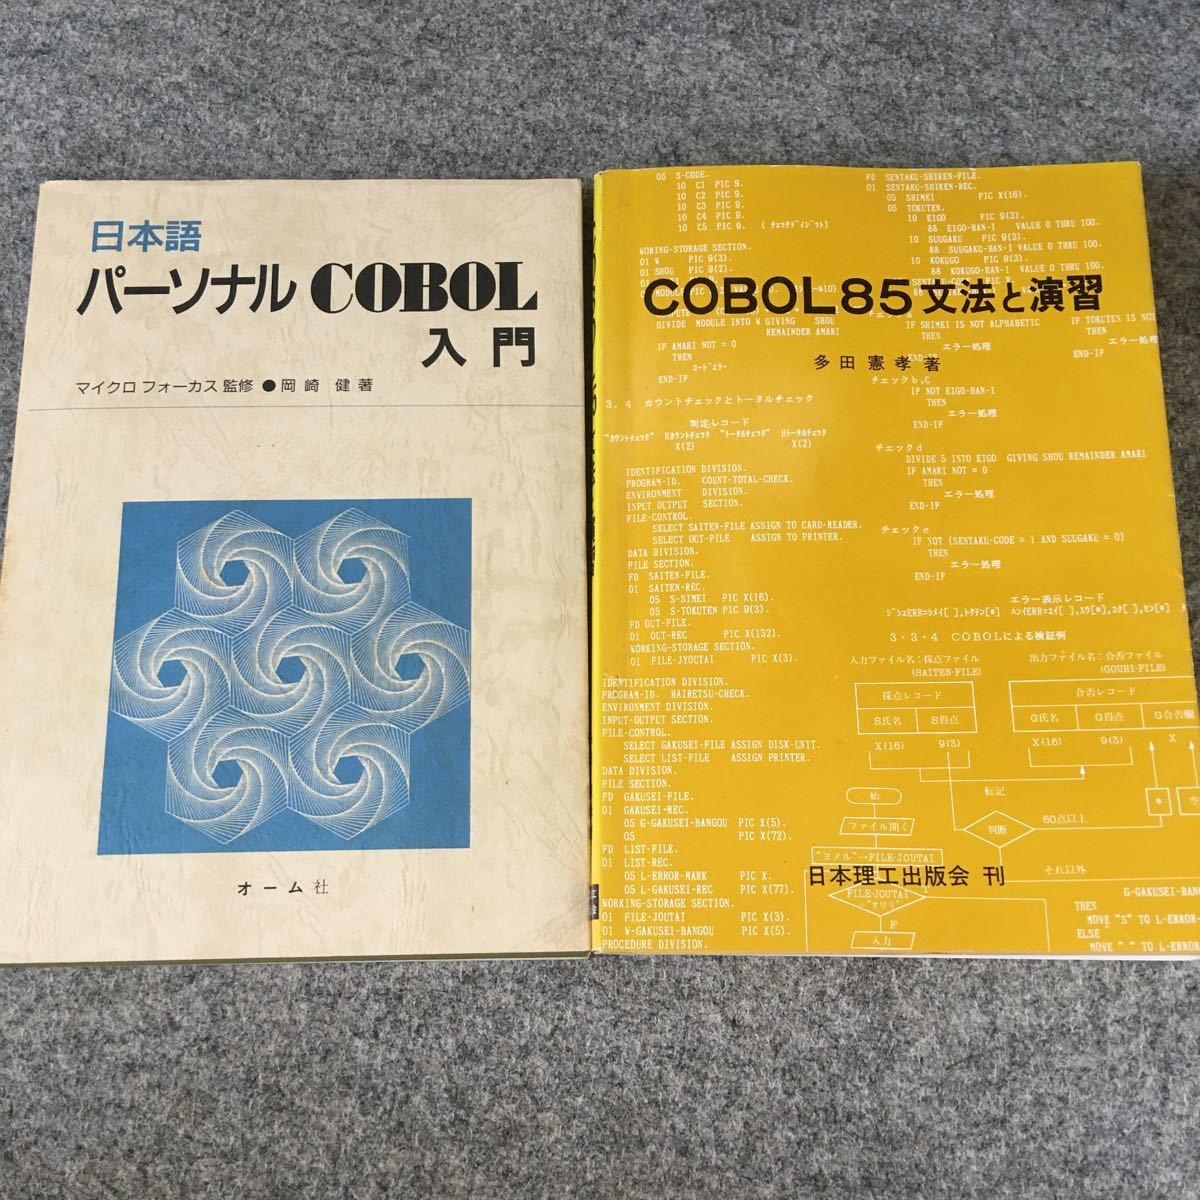 COBOL grammar .../ personal COBOL introduction . extra. workbook 3 pcs. set *koboru personal computer used book